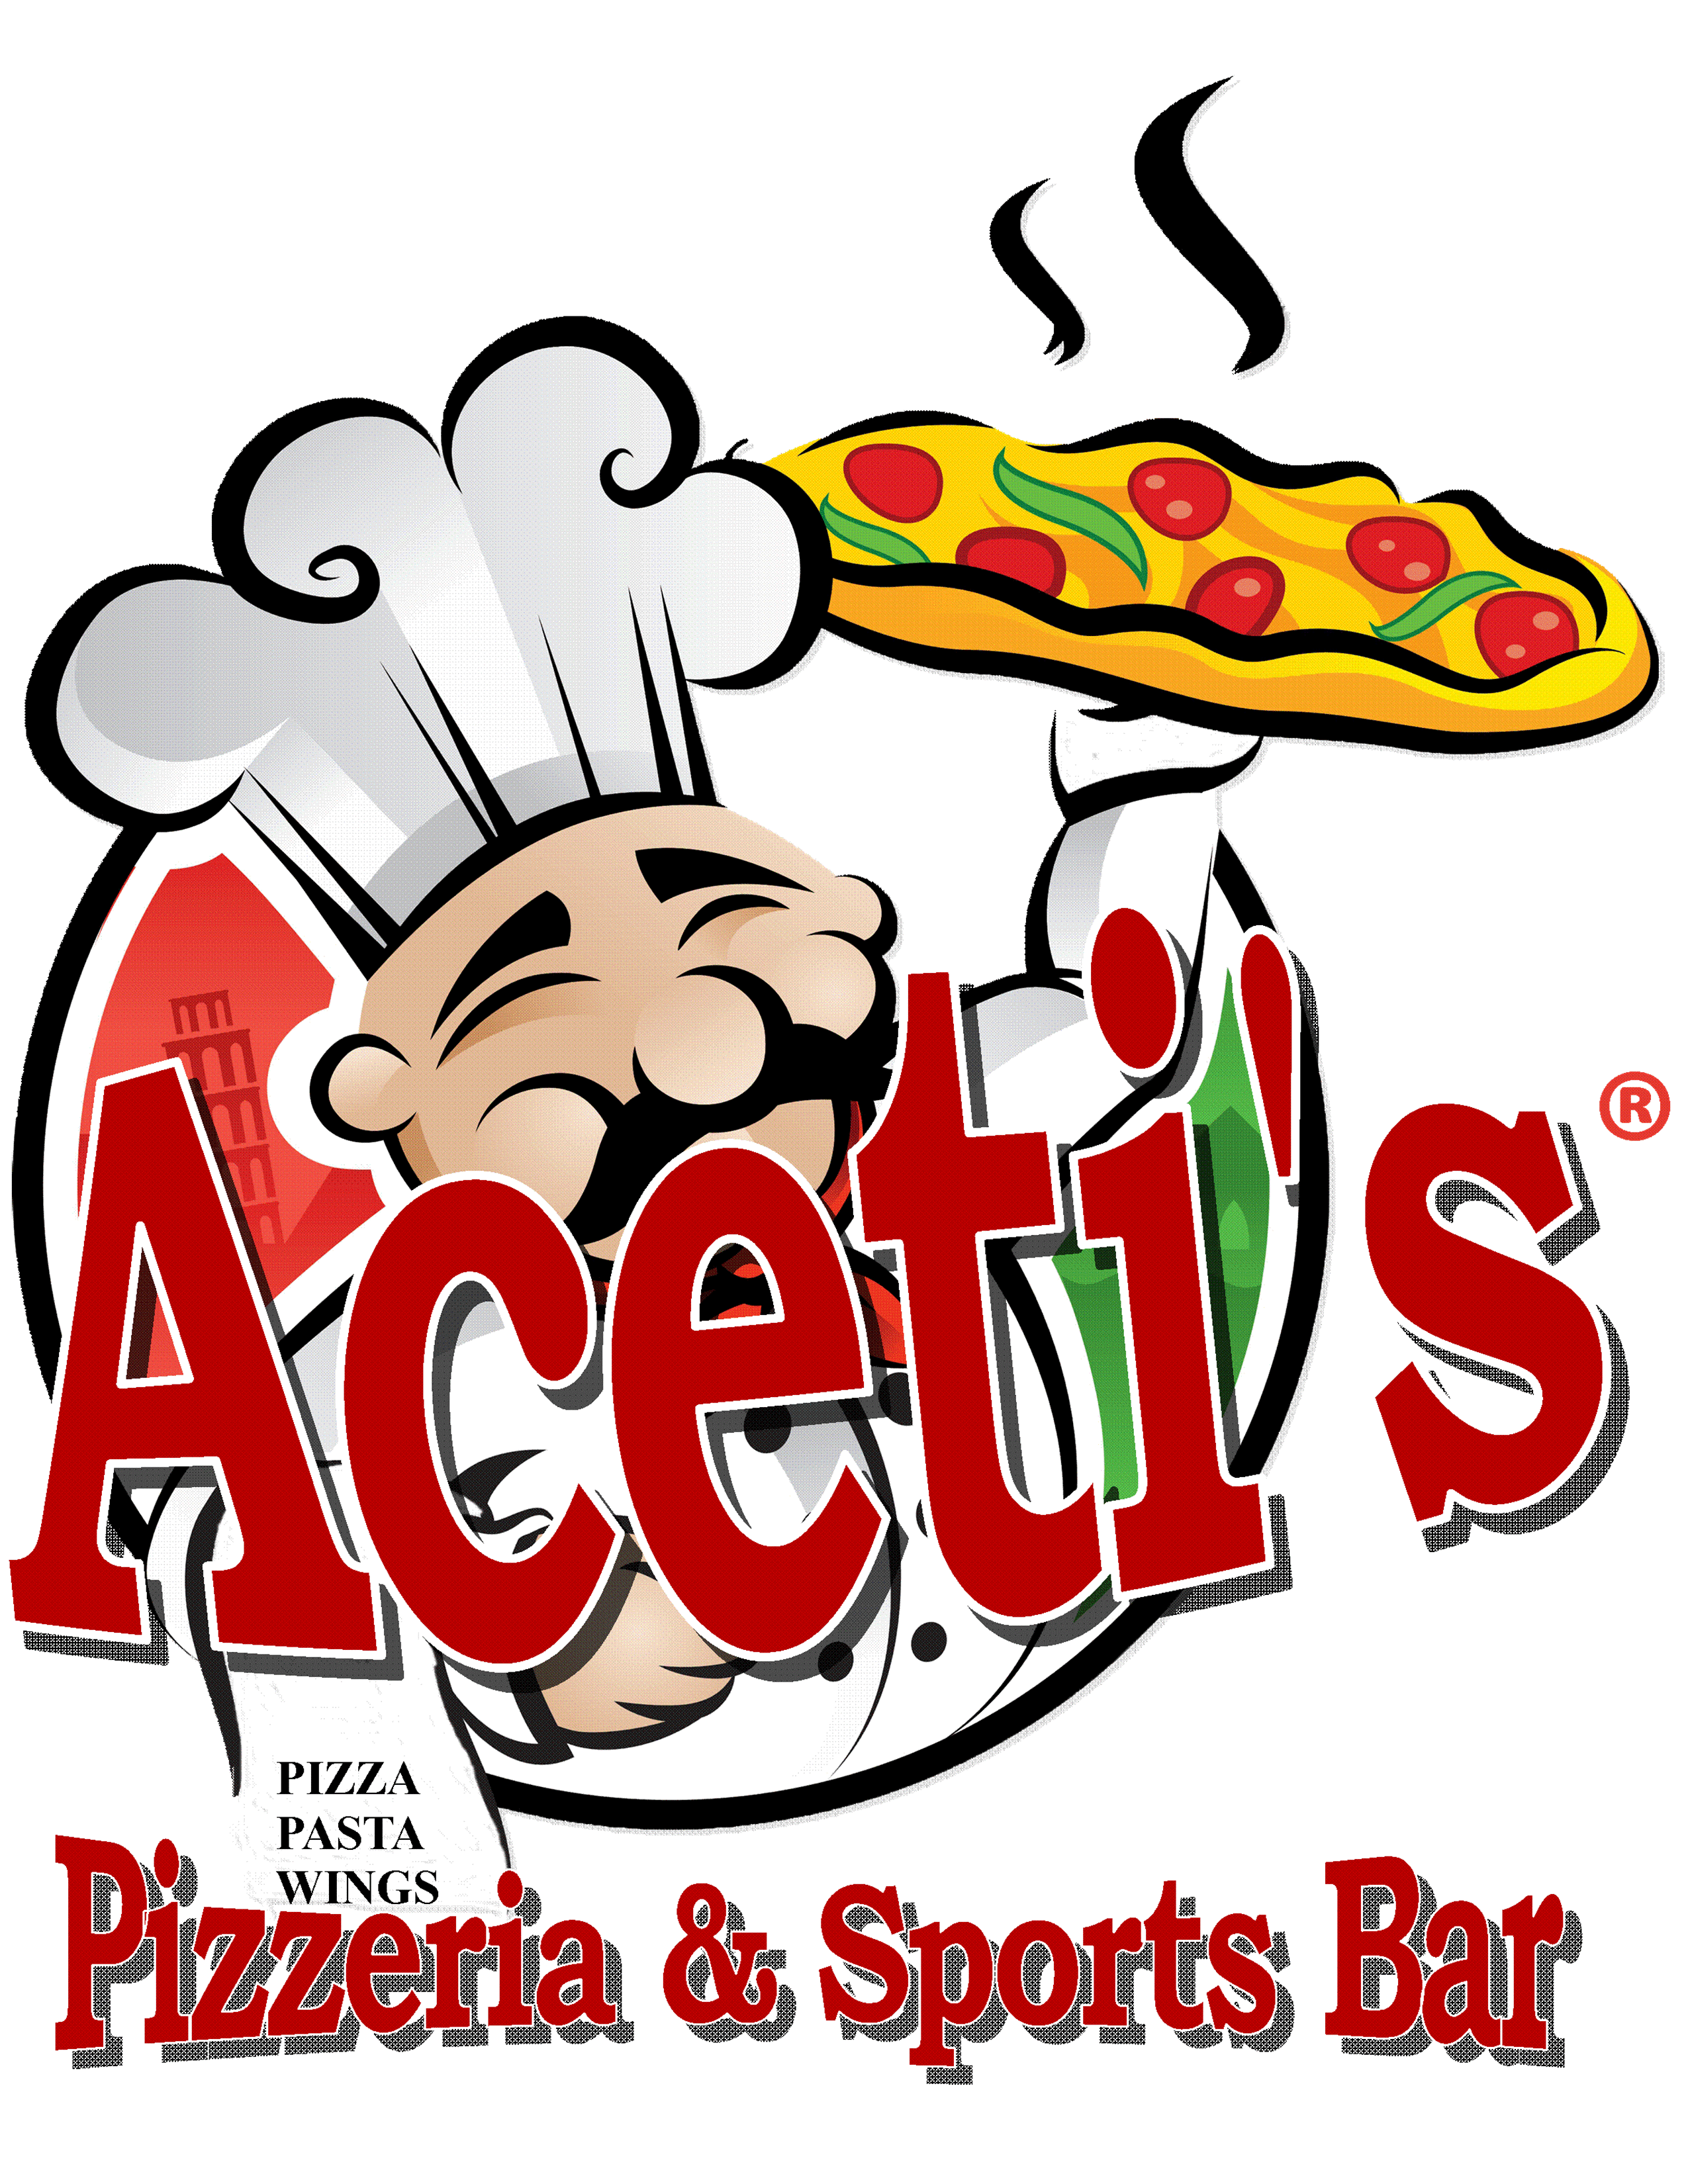 Aceti's Pizzeria & Sports Bar